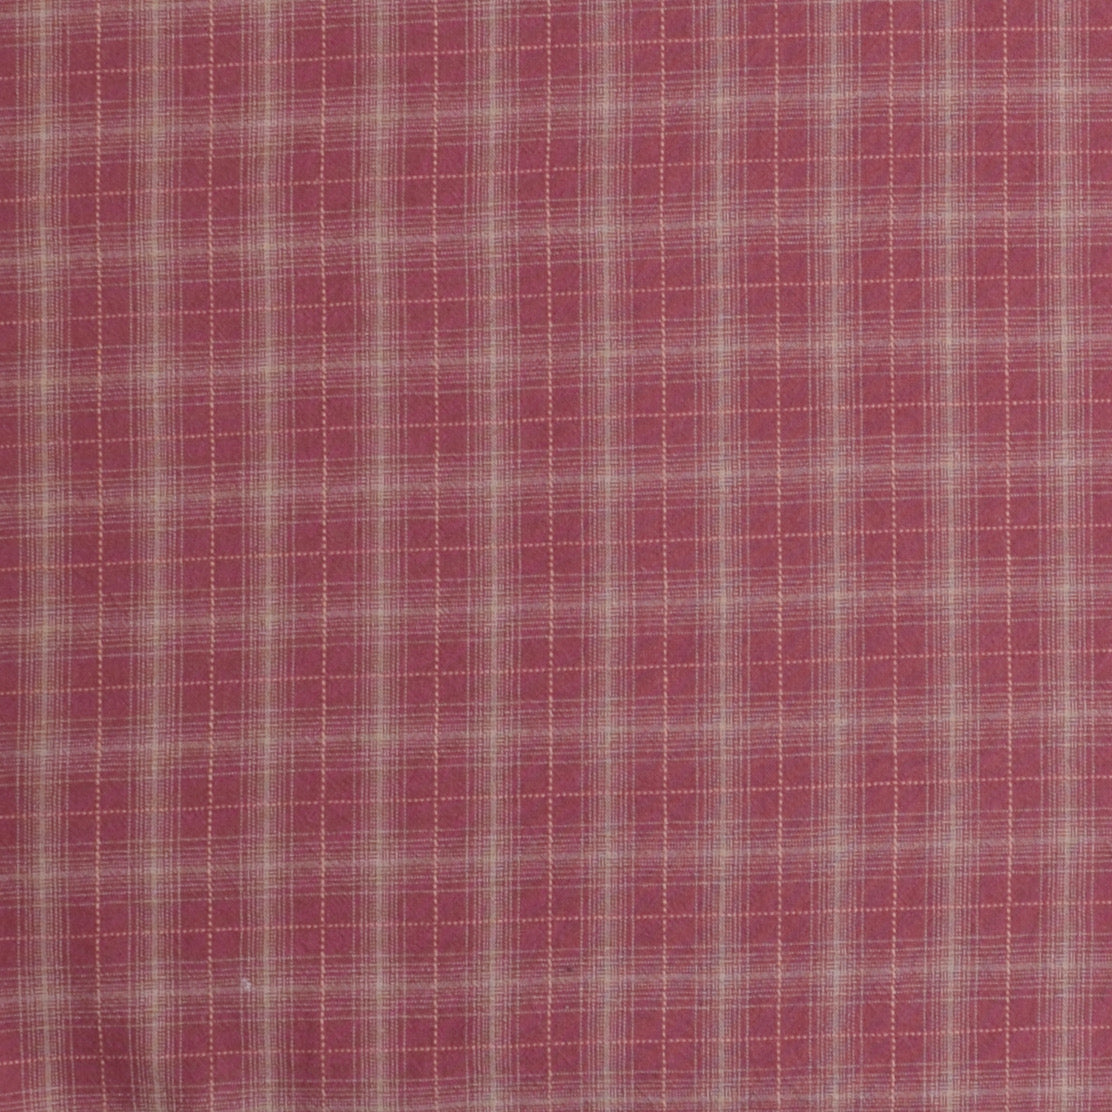 Dyed yarn cotton fabric